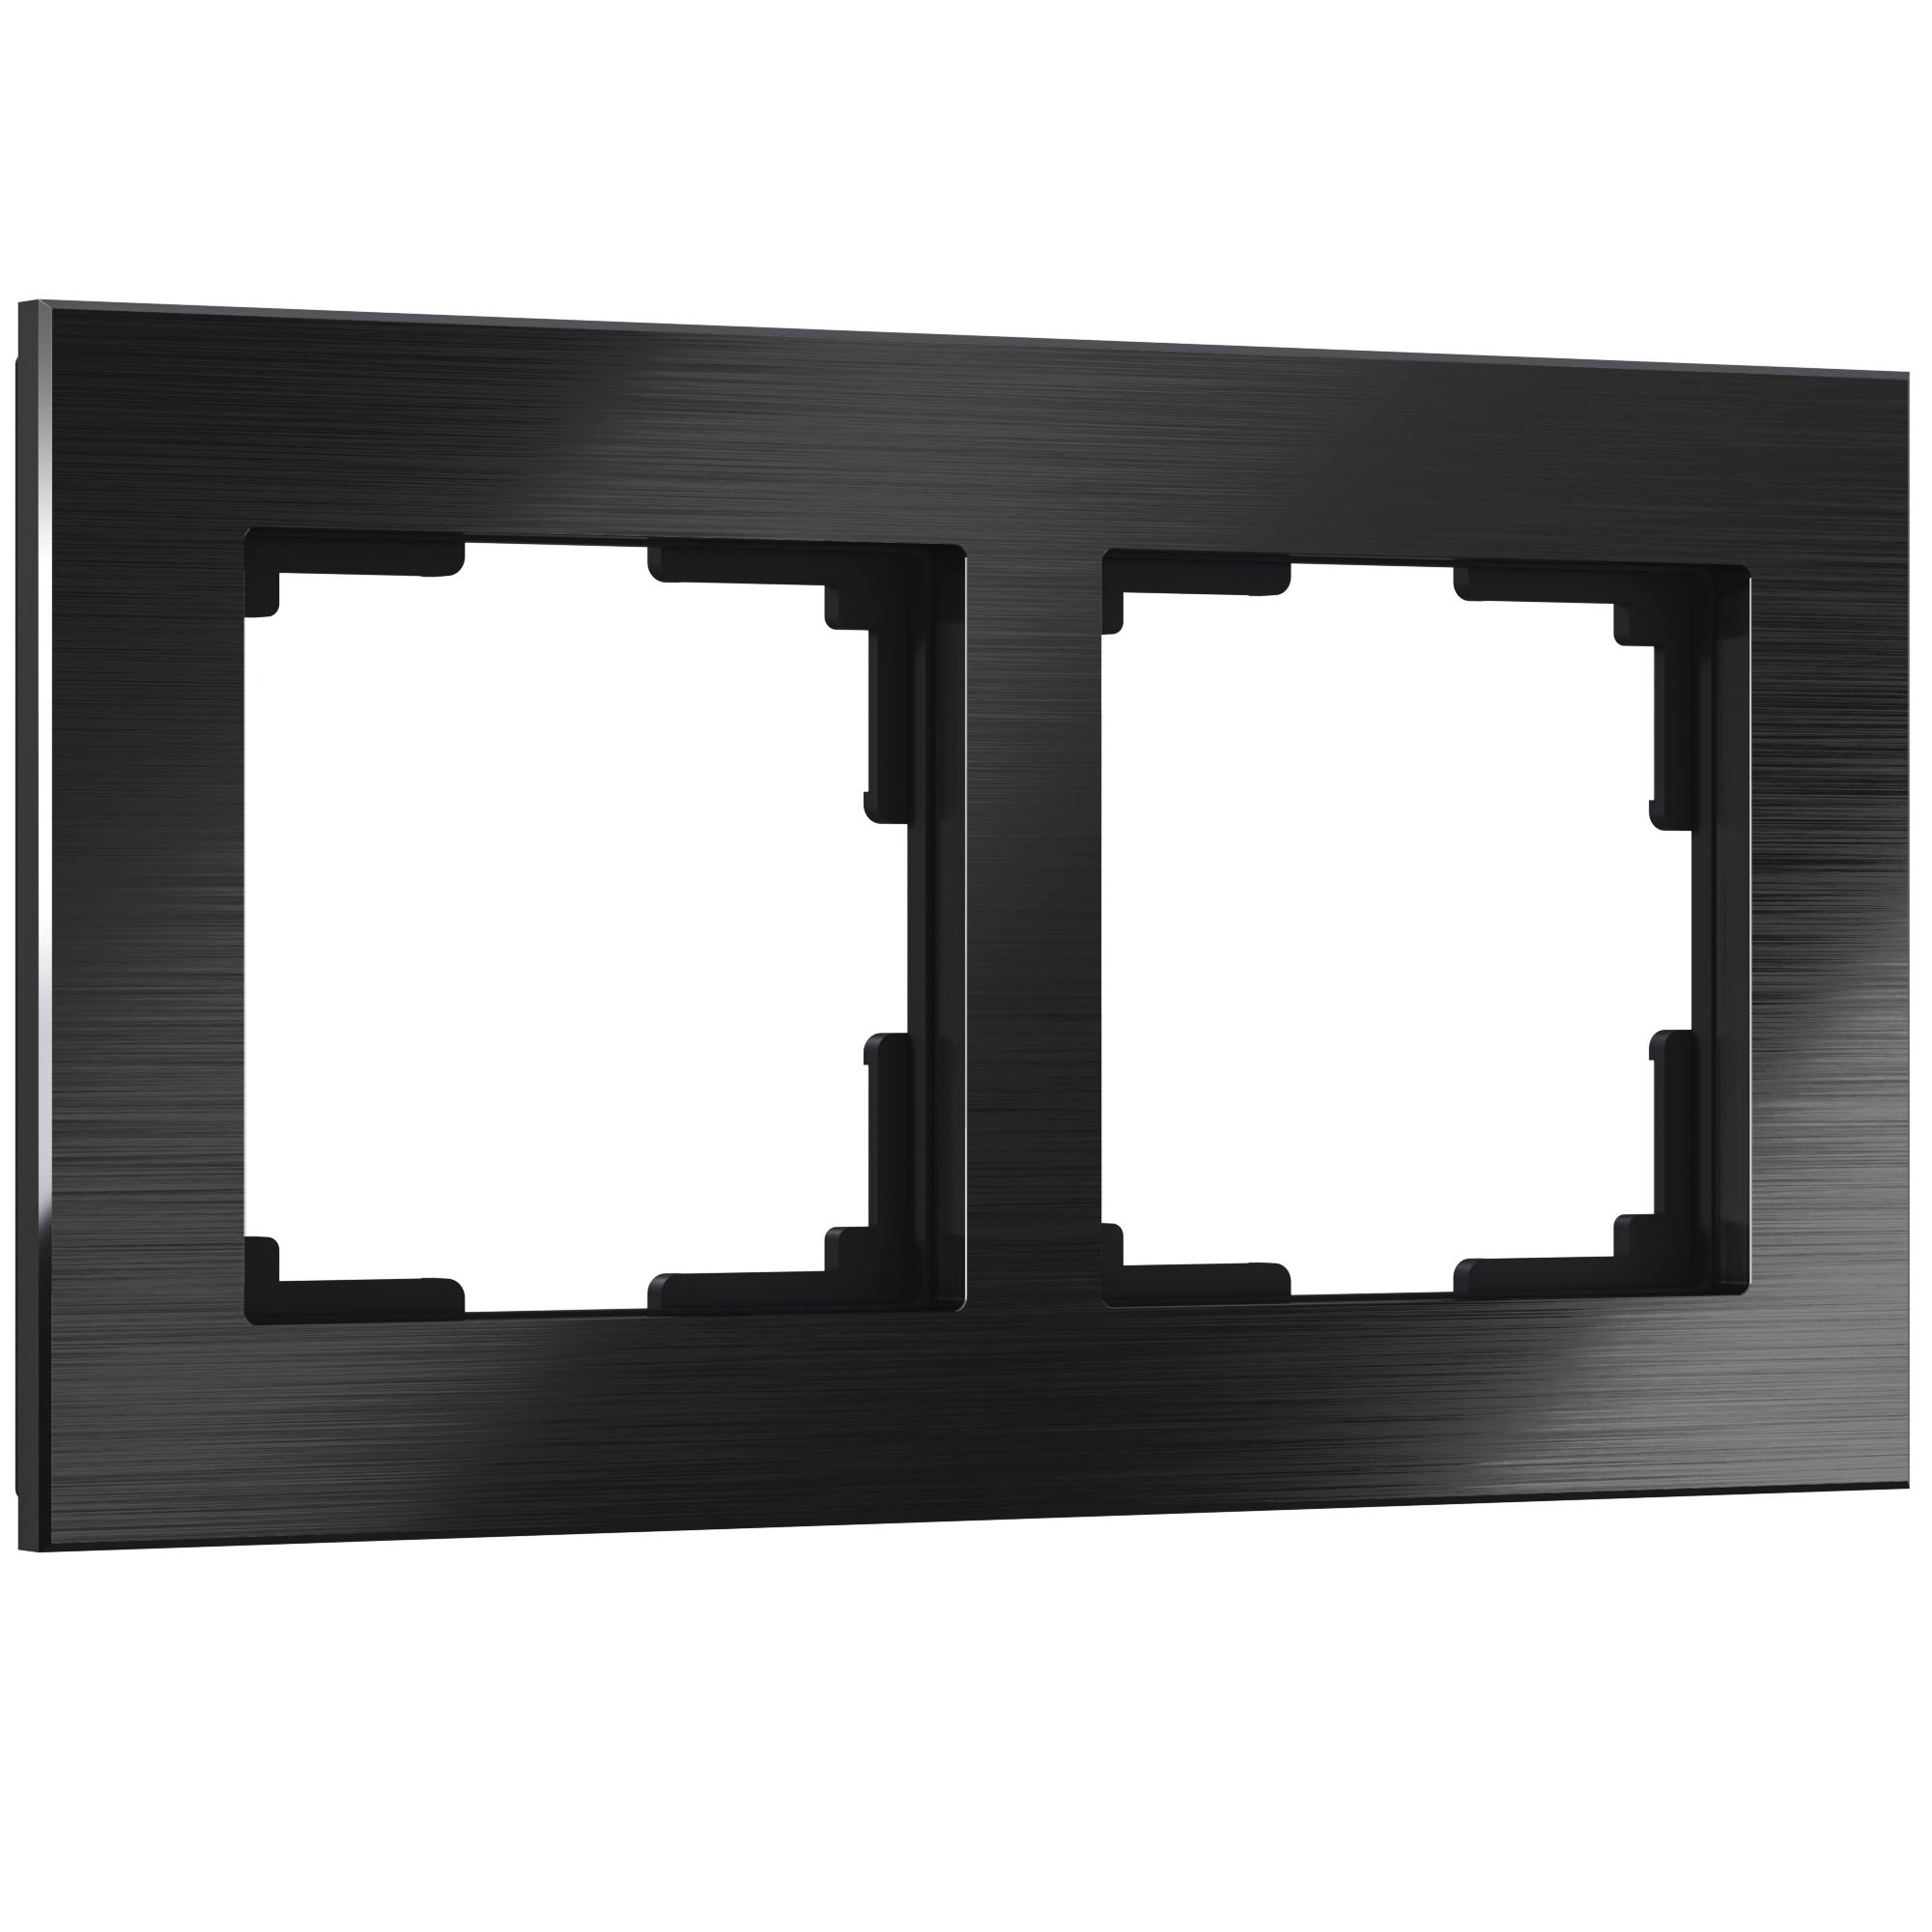 Рамка на 2 поста (черный алюминий) Werkel Aluminium черный алюминий W0021708. Фото 1